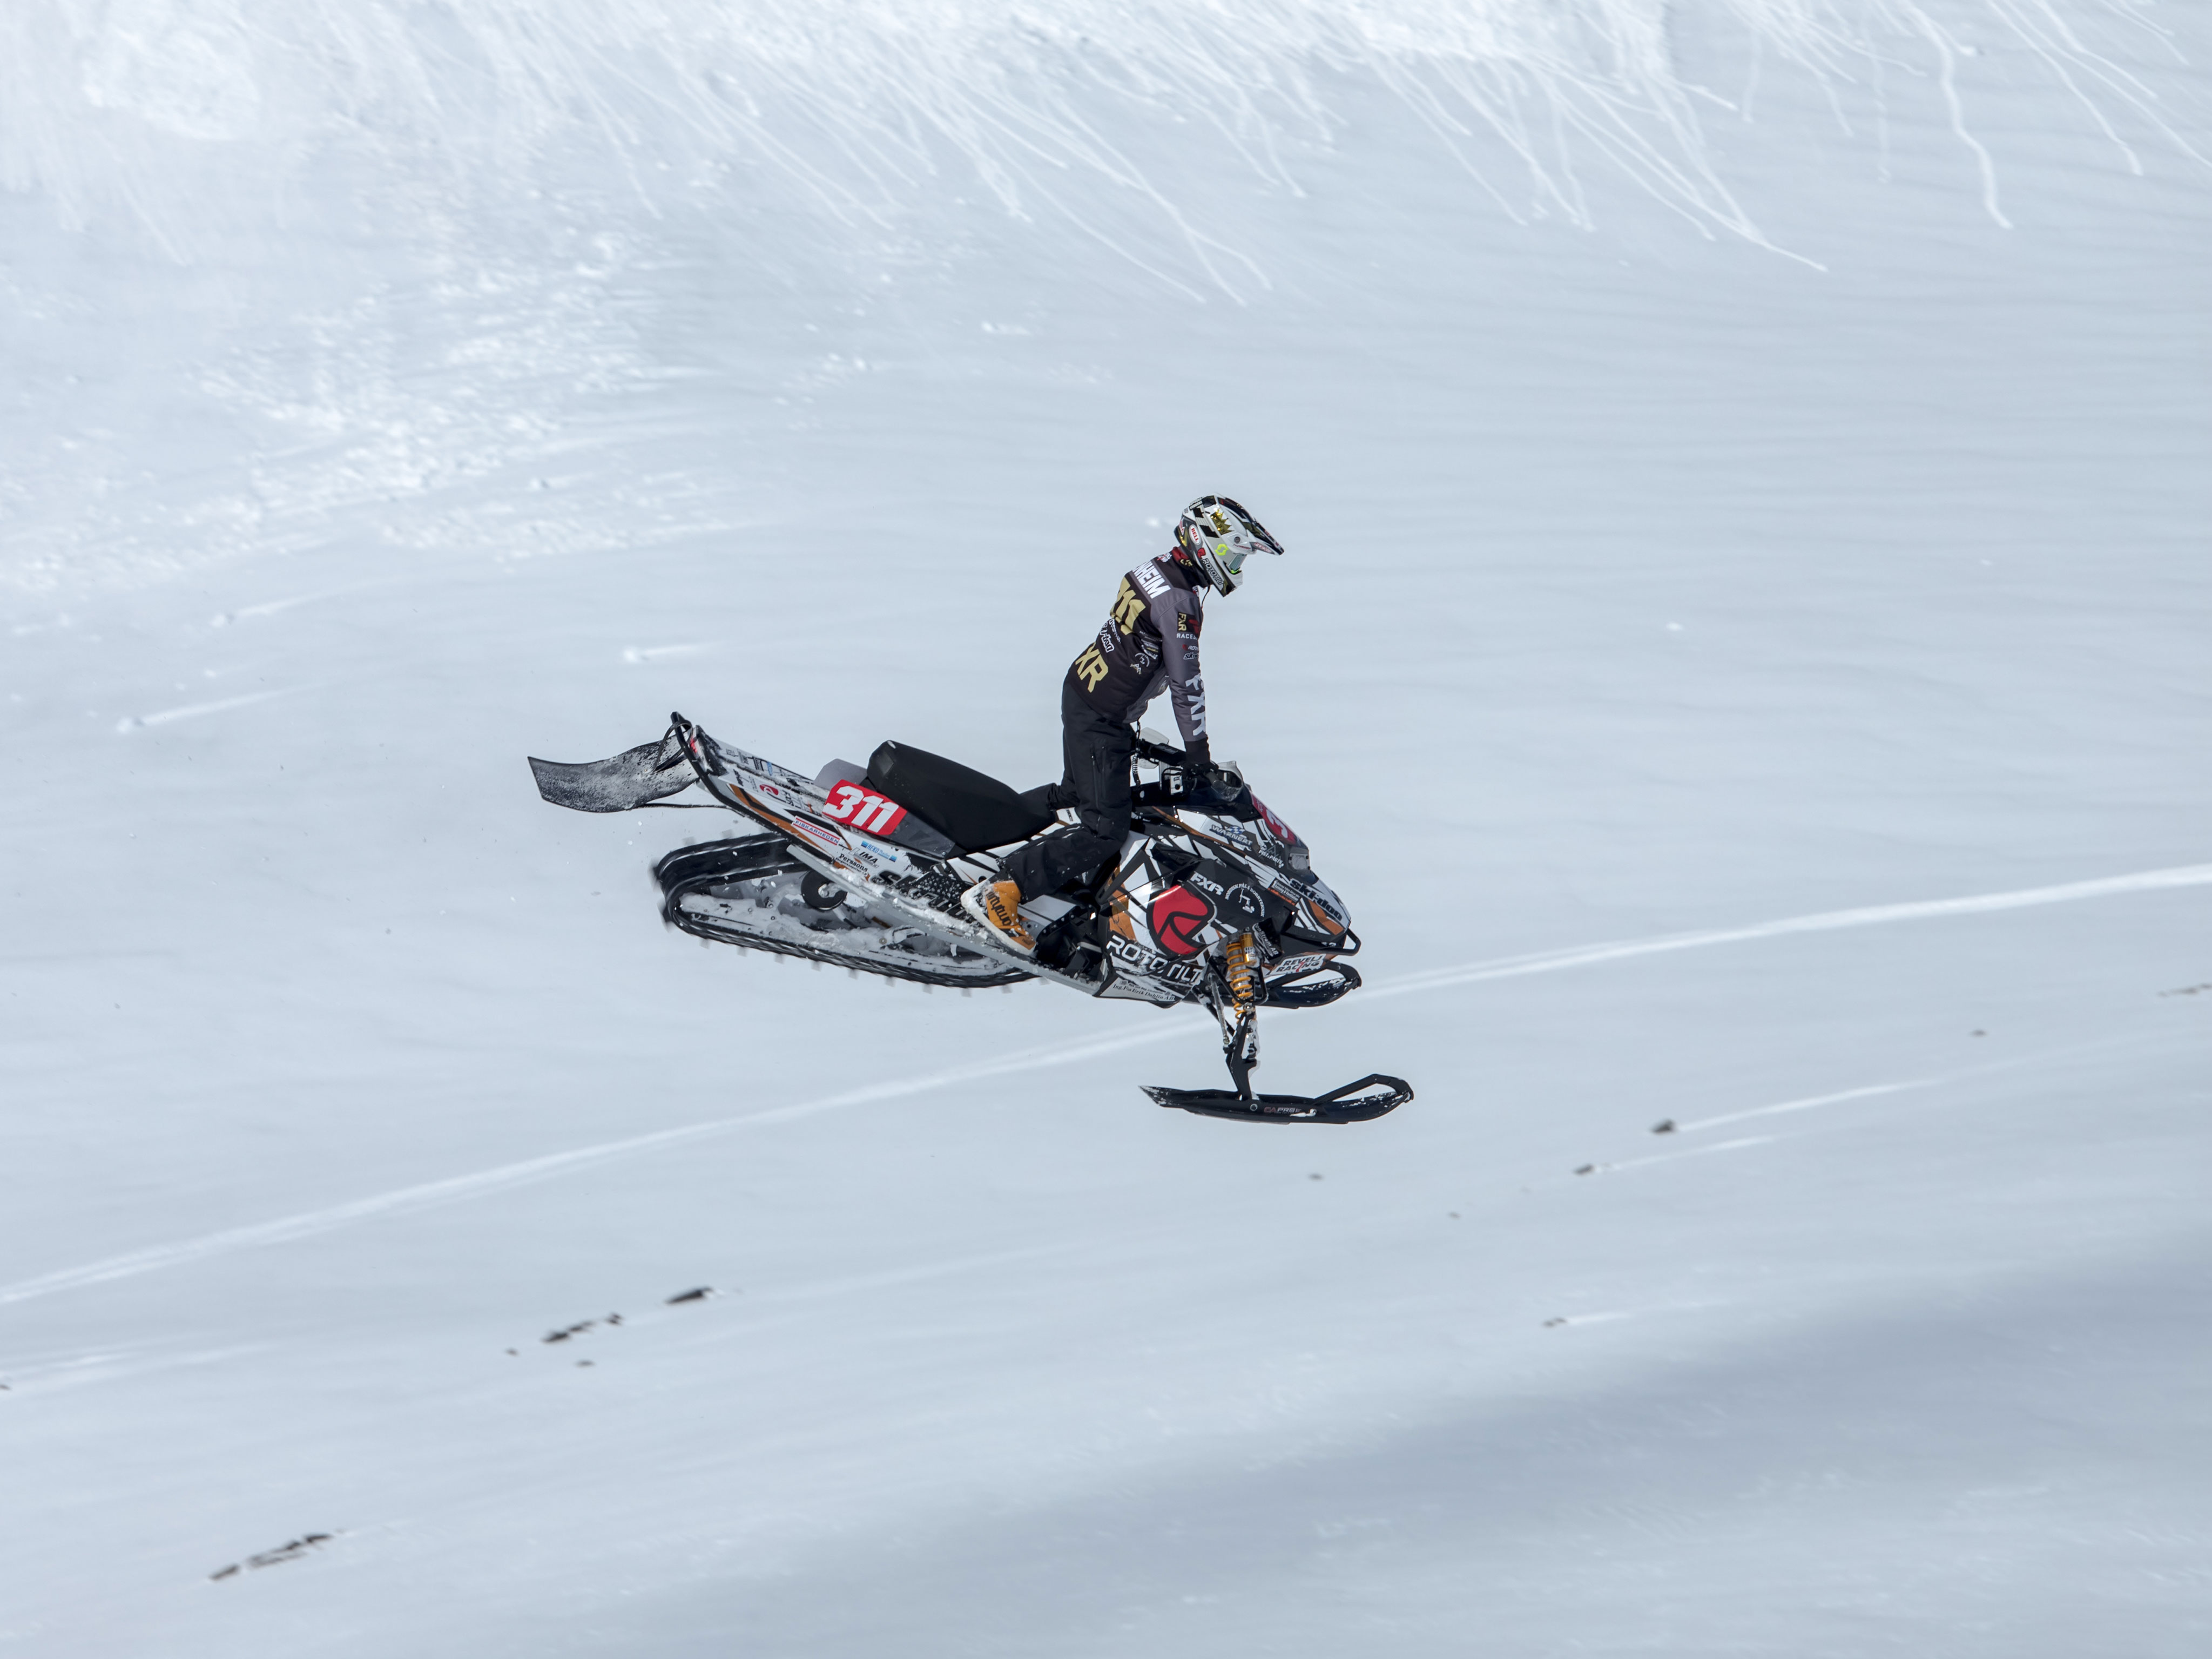 Adam Renheim jumping with his Ski-Doo